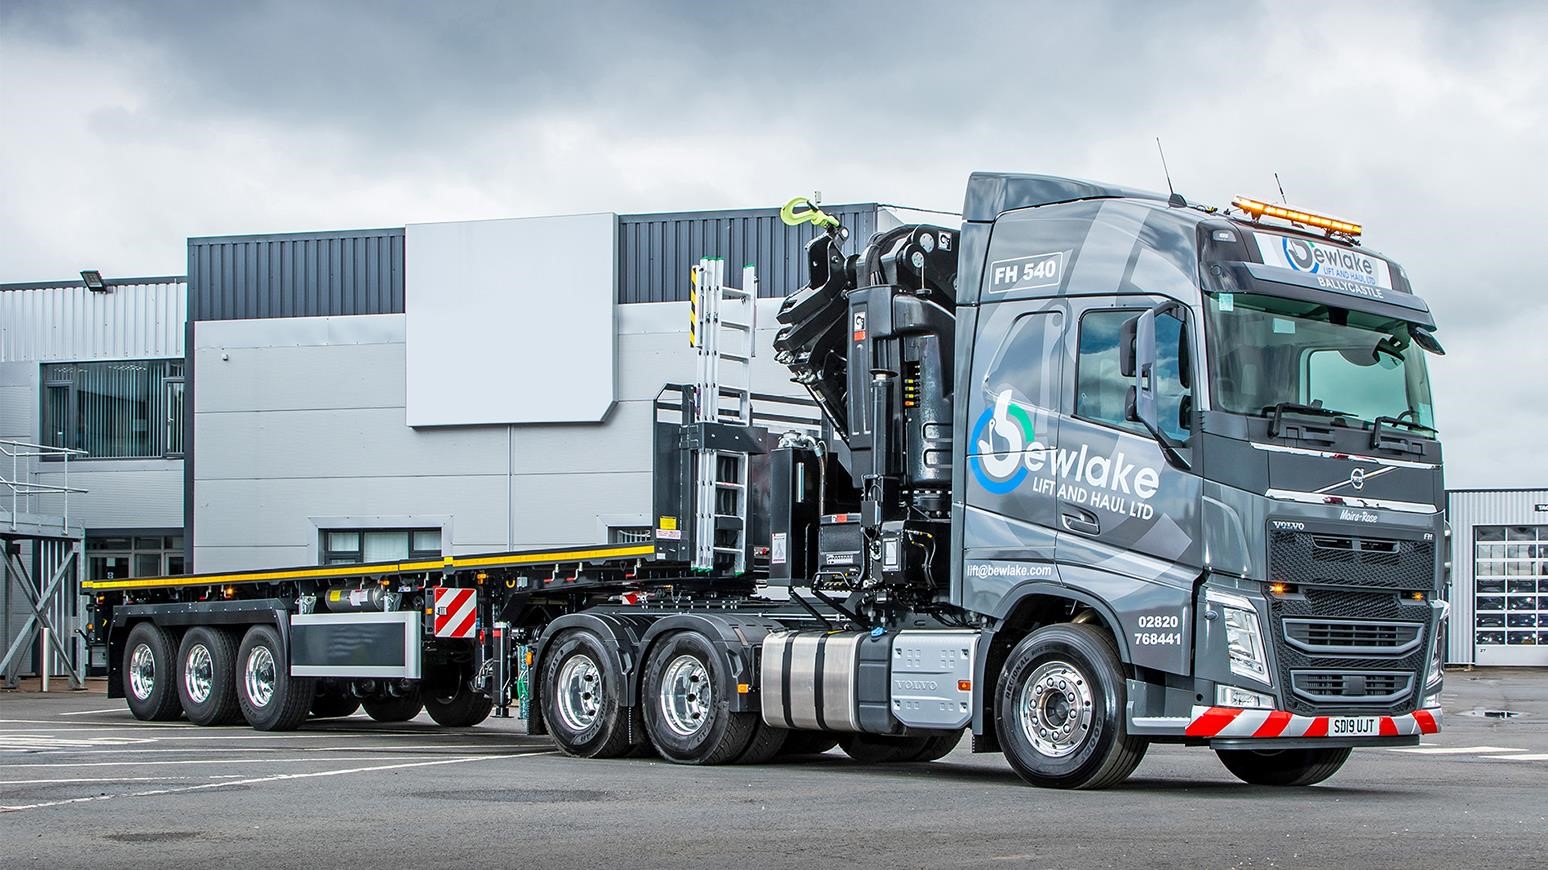 Bewlake Lift & Haul Ltd Starts New Business With Volvo FH Model, Hiab Truck-Mounted Crane & SDC Trailer